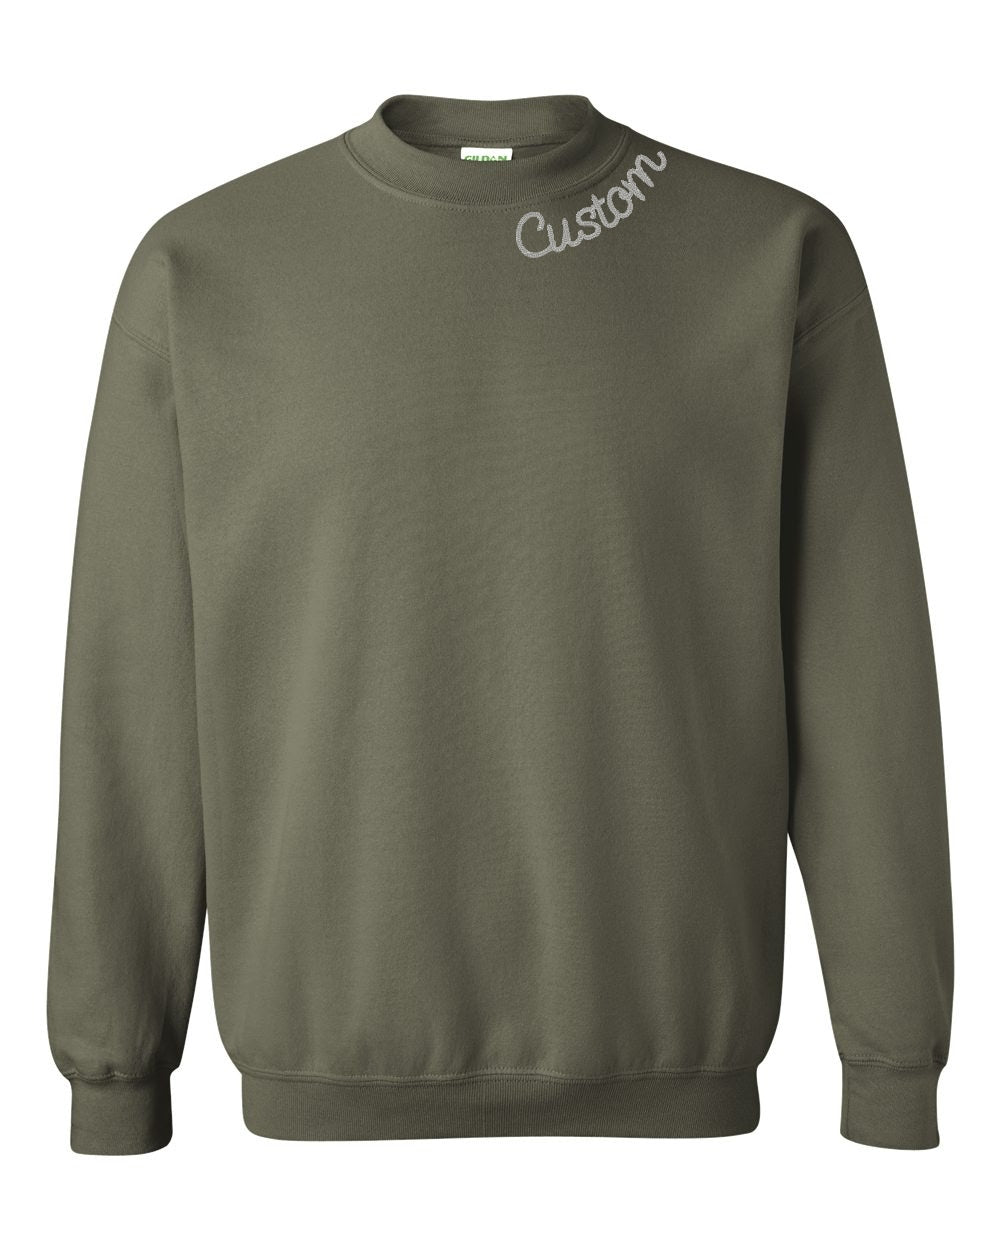 Military Green Custom Embroidered Crewneck Sweatshirt - Personalized Chain Stitch